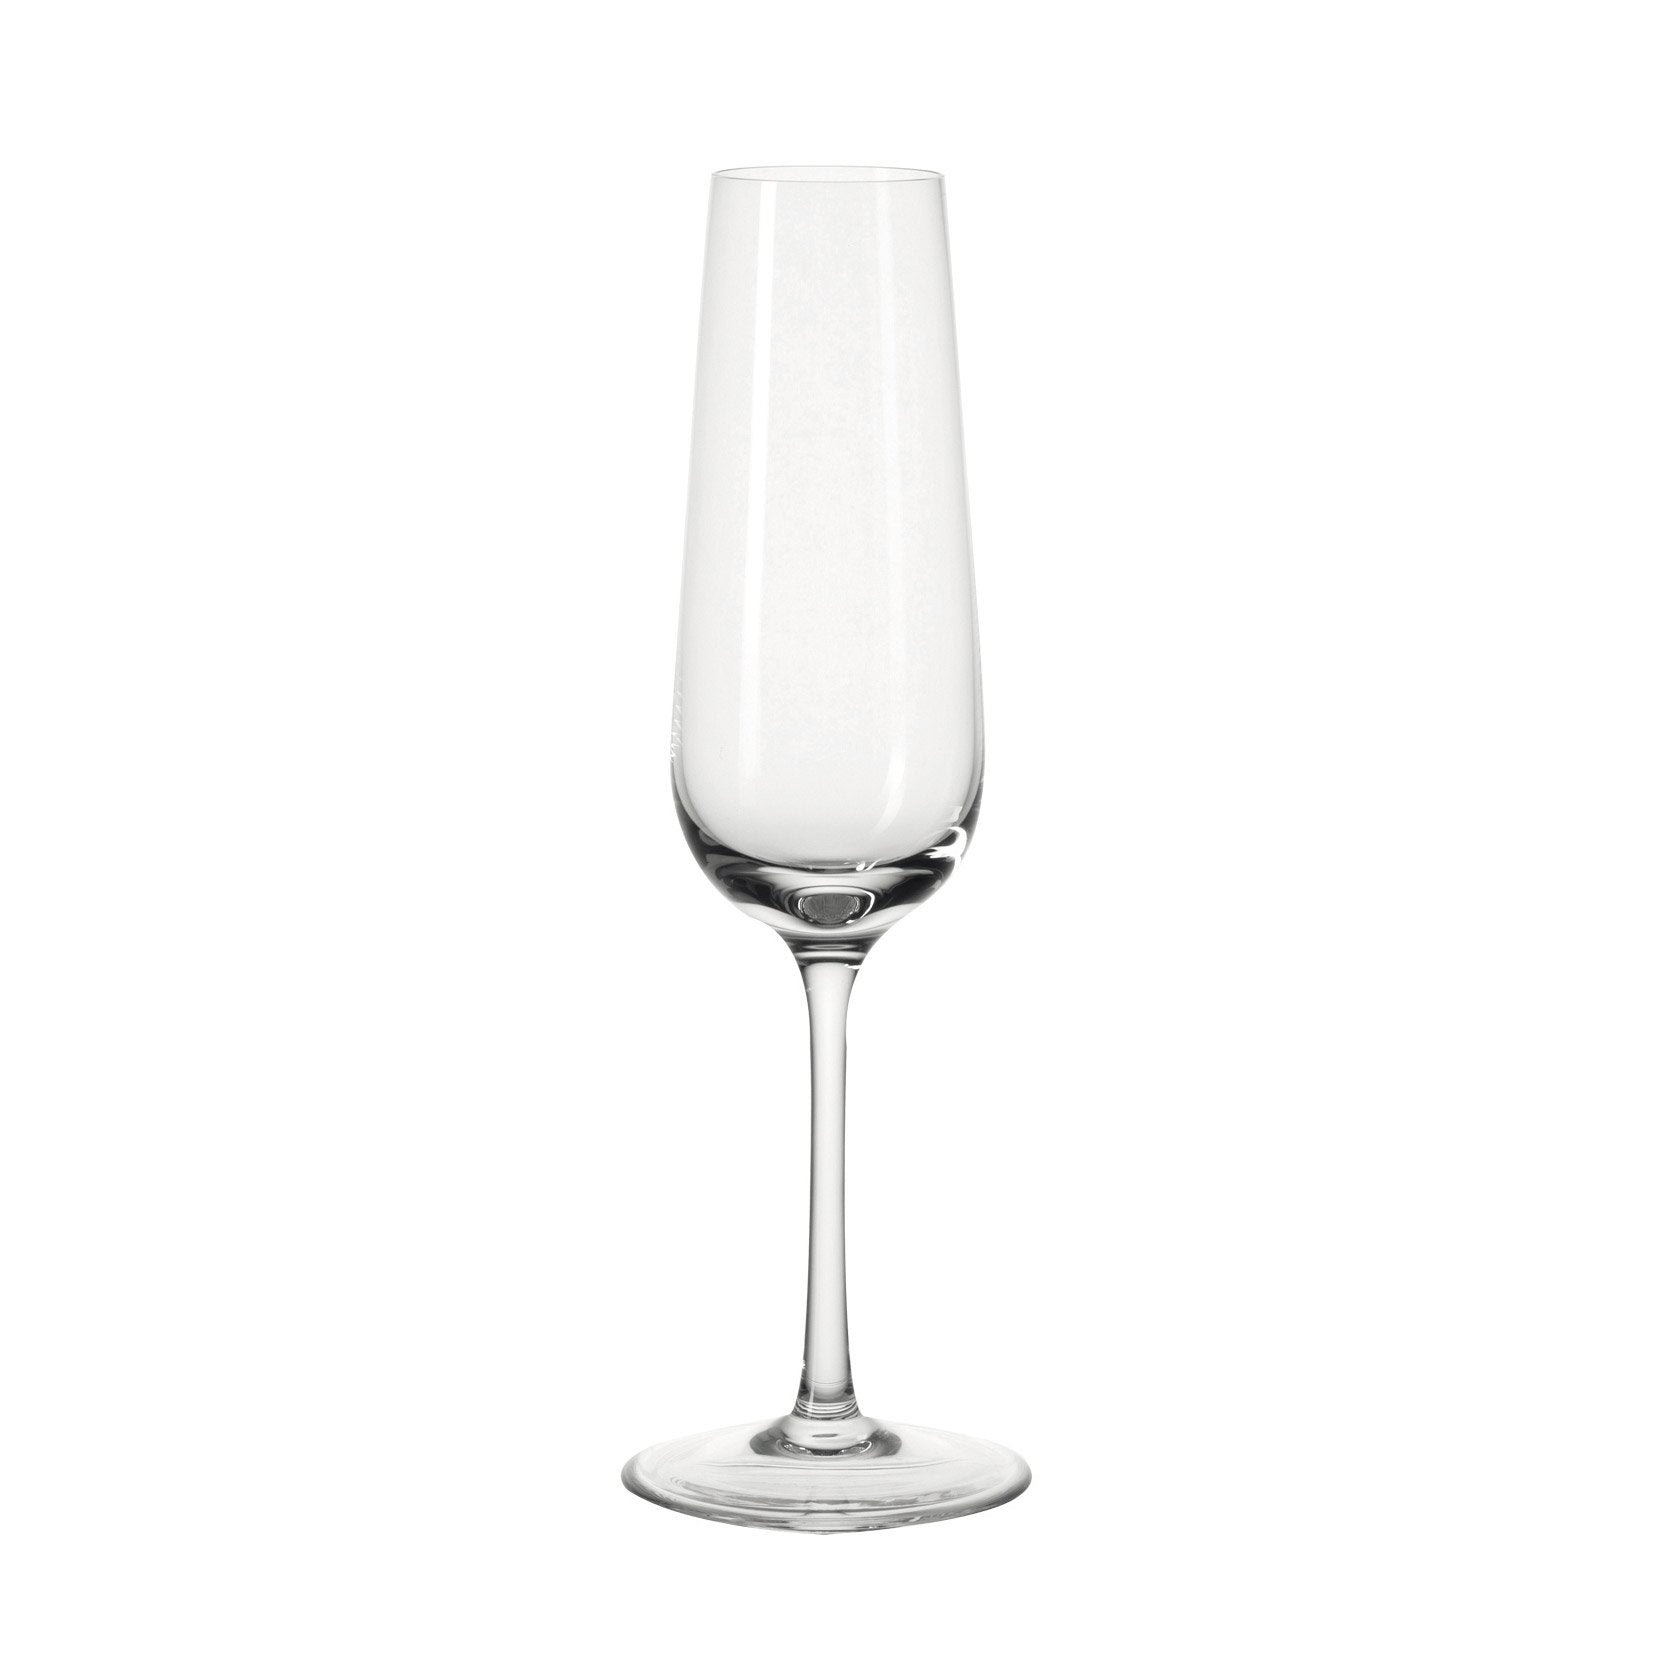 Leonardo Champagne Glasses - Set of 6 in TIVOLI Design